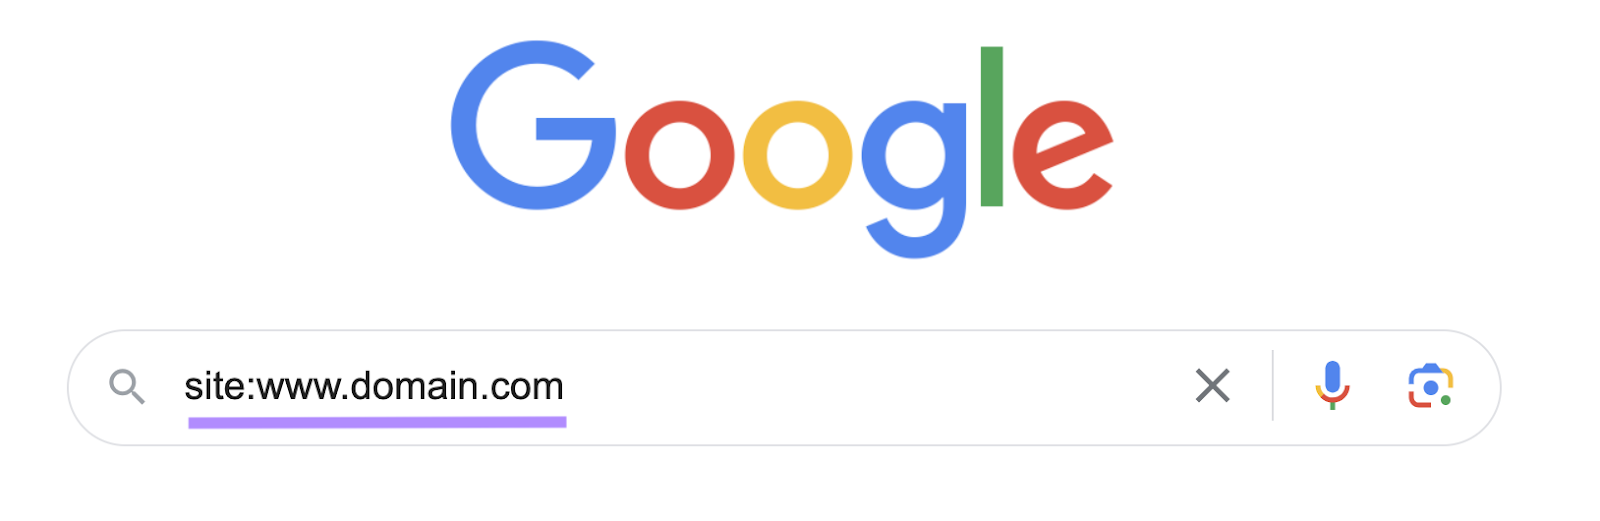 www.domain.com” entered into Google hunt  bar